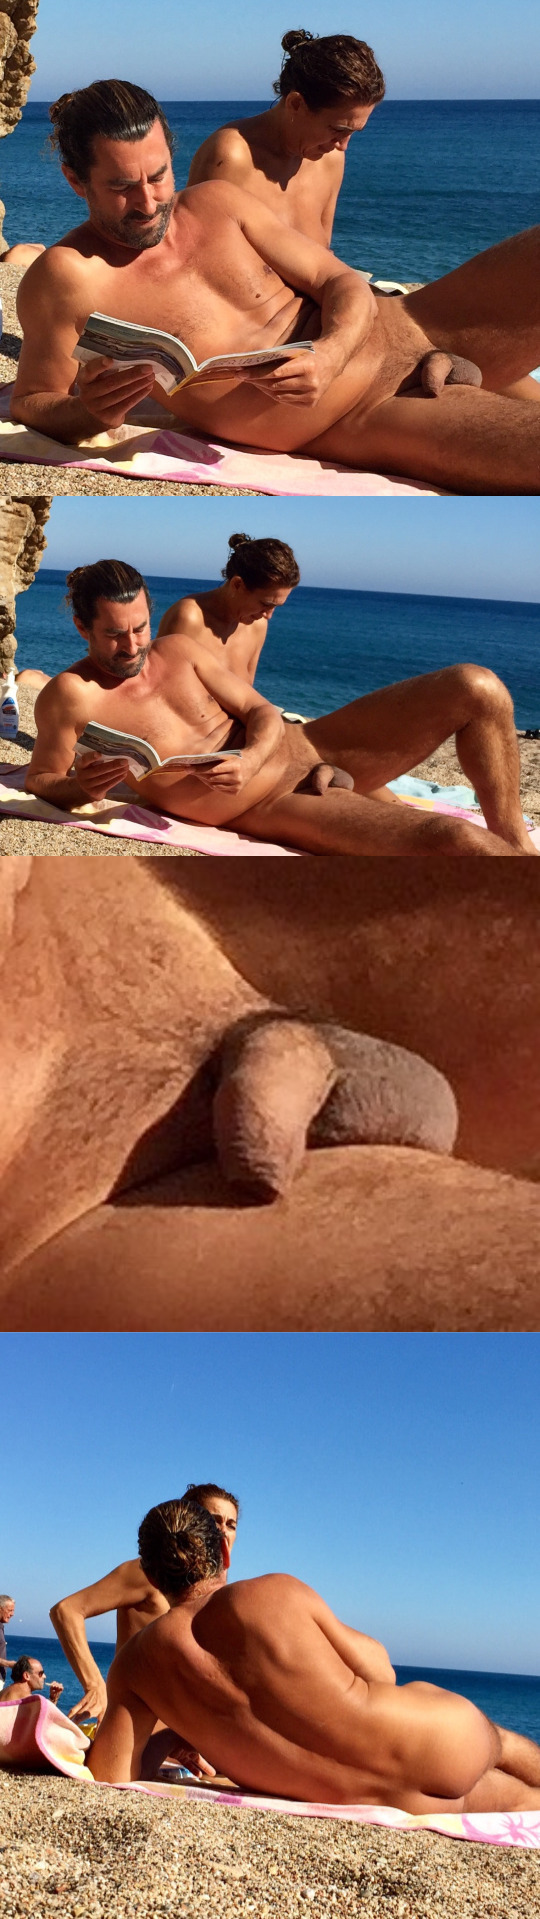 straight-married-man-nudist-beach